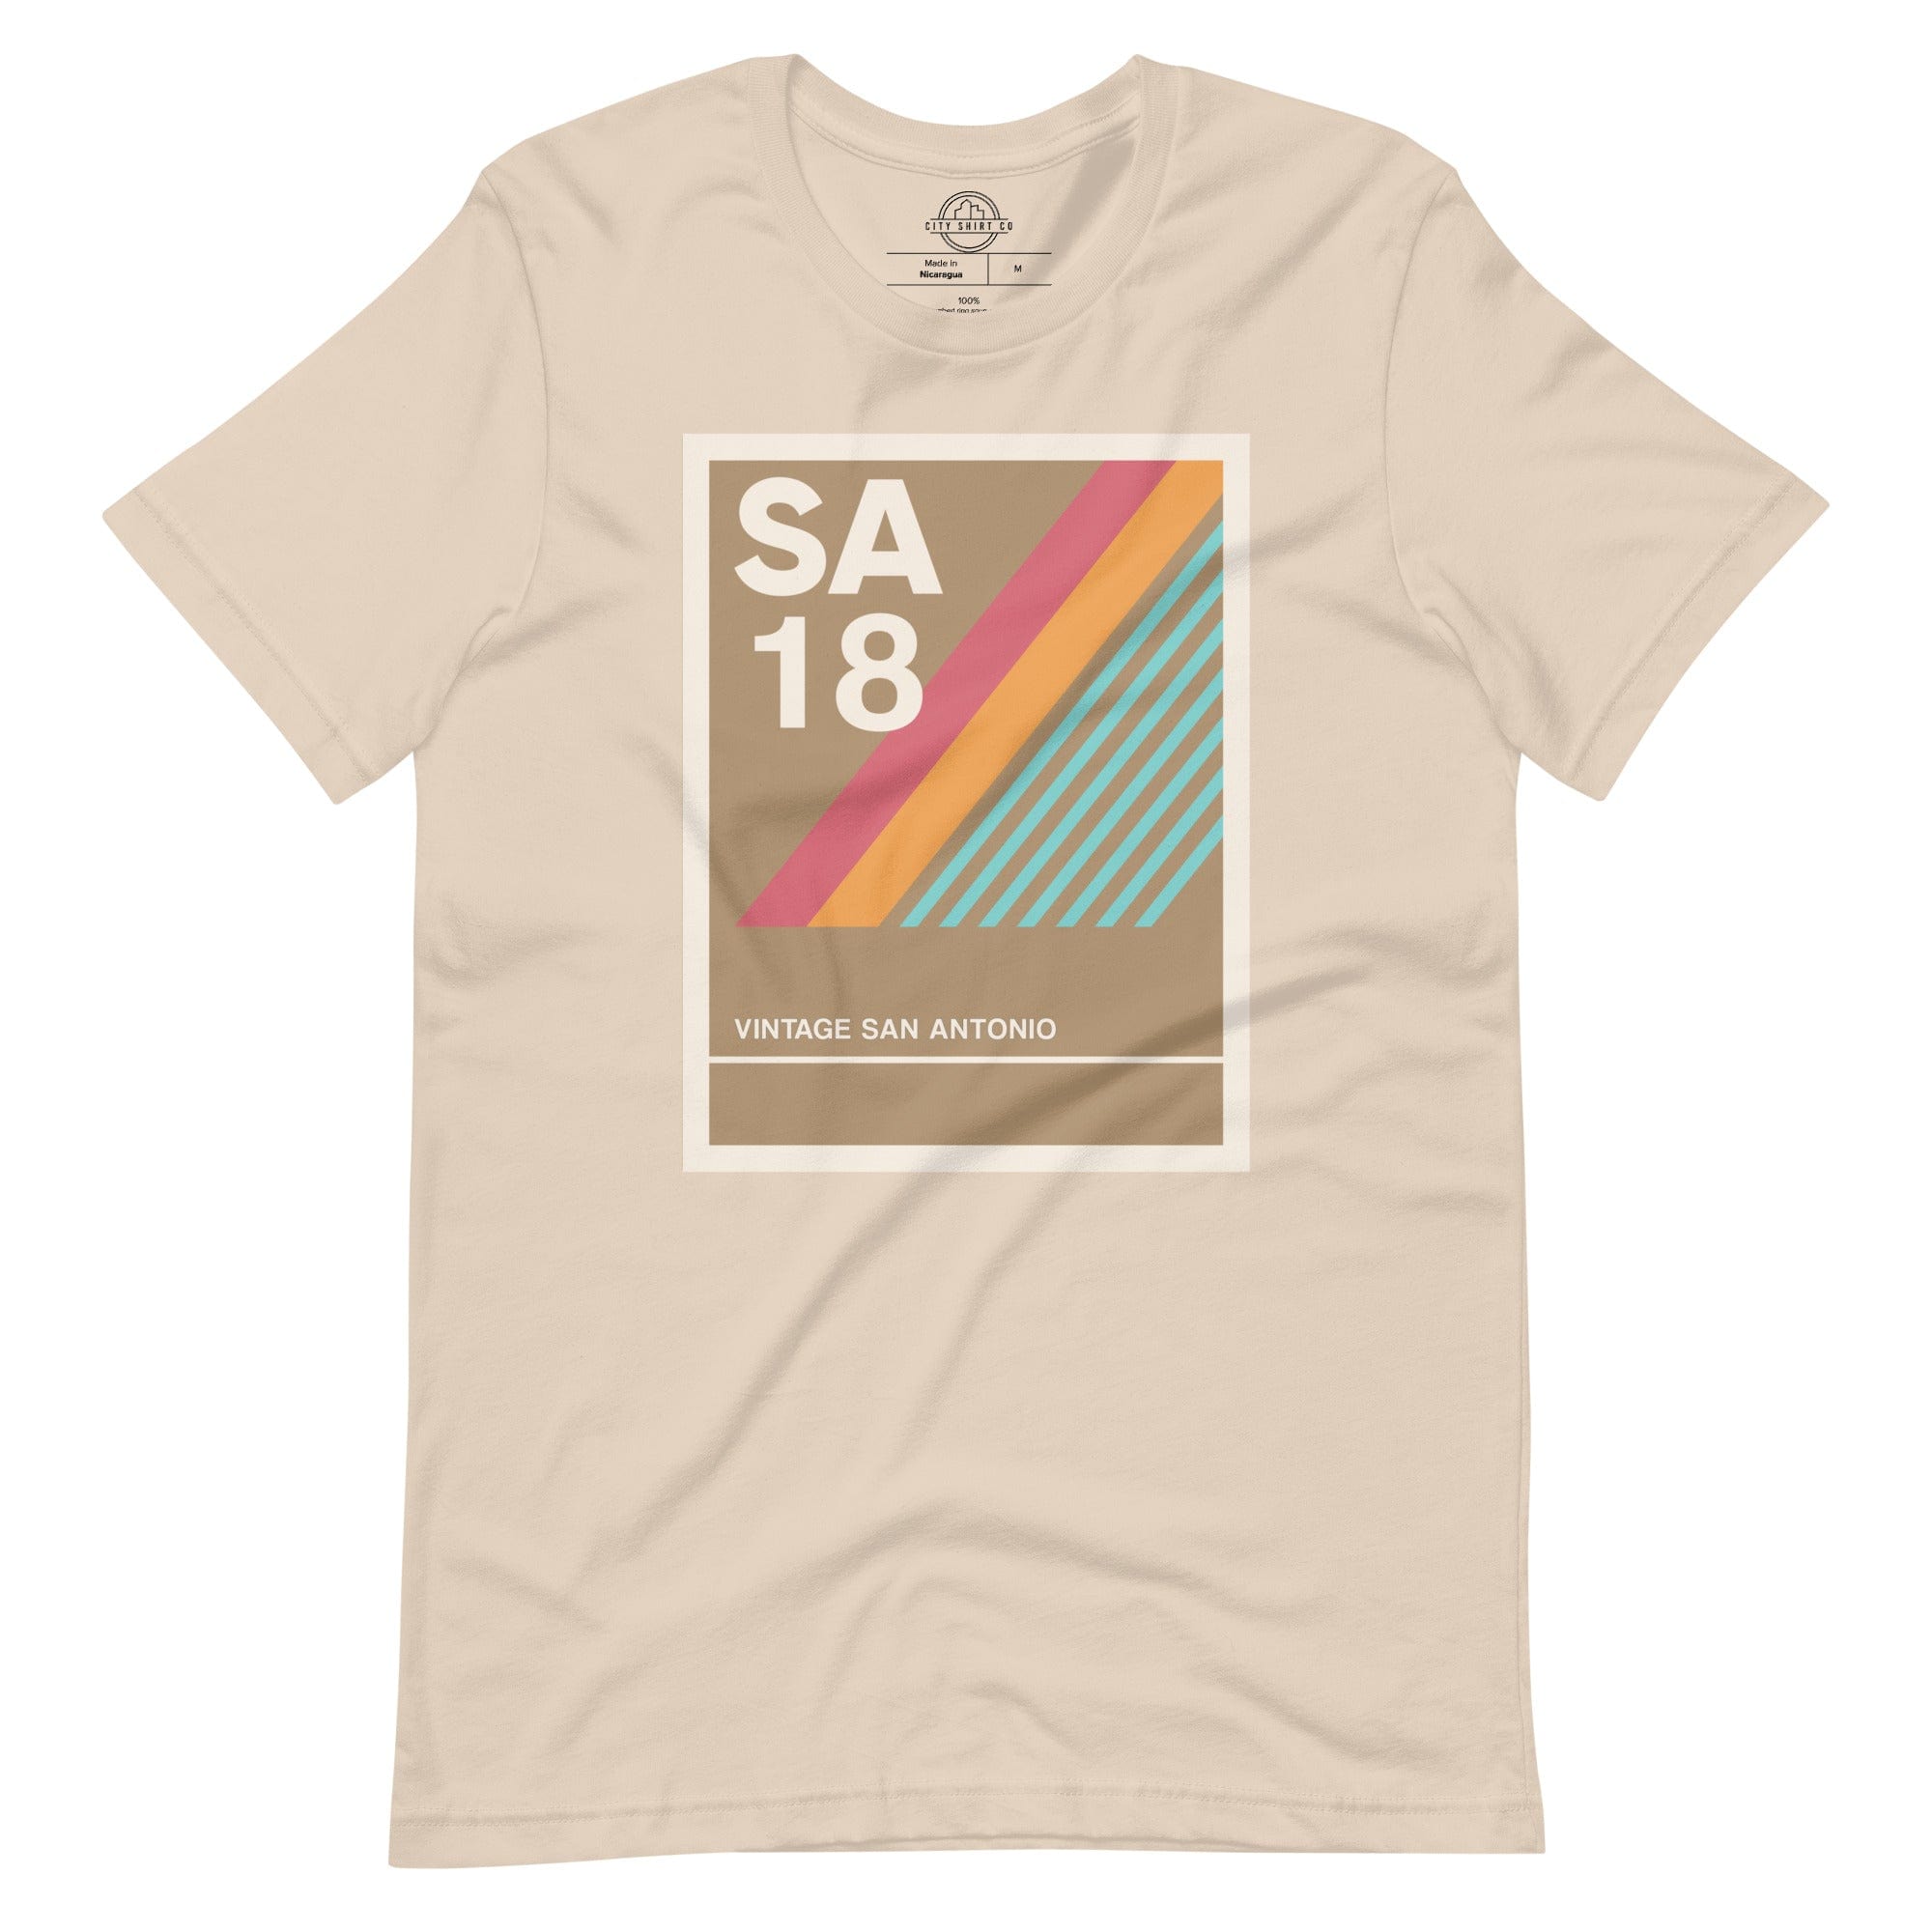 City Shirt Co Vintage San Antonio T-Shirt Soft Cream / S